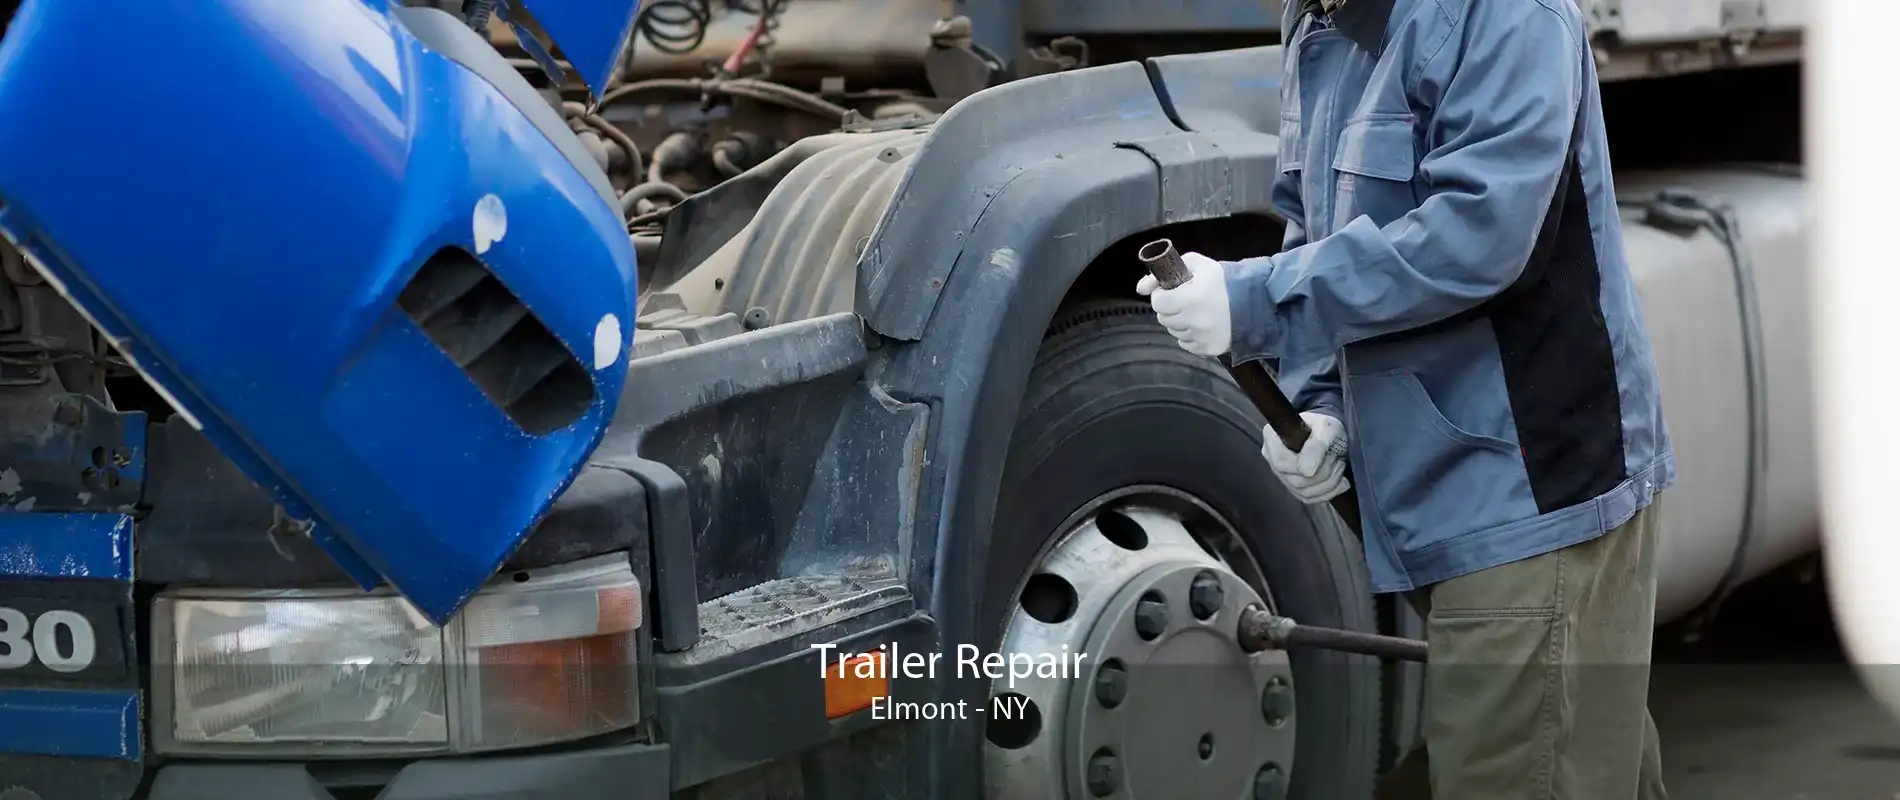 Trailer Repair Elmont - NY